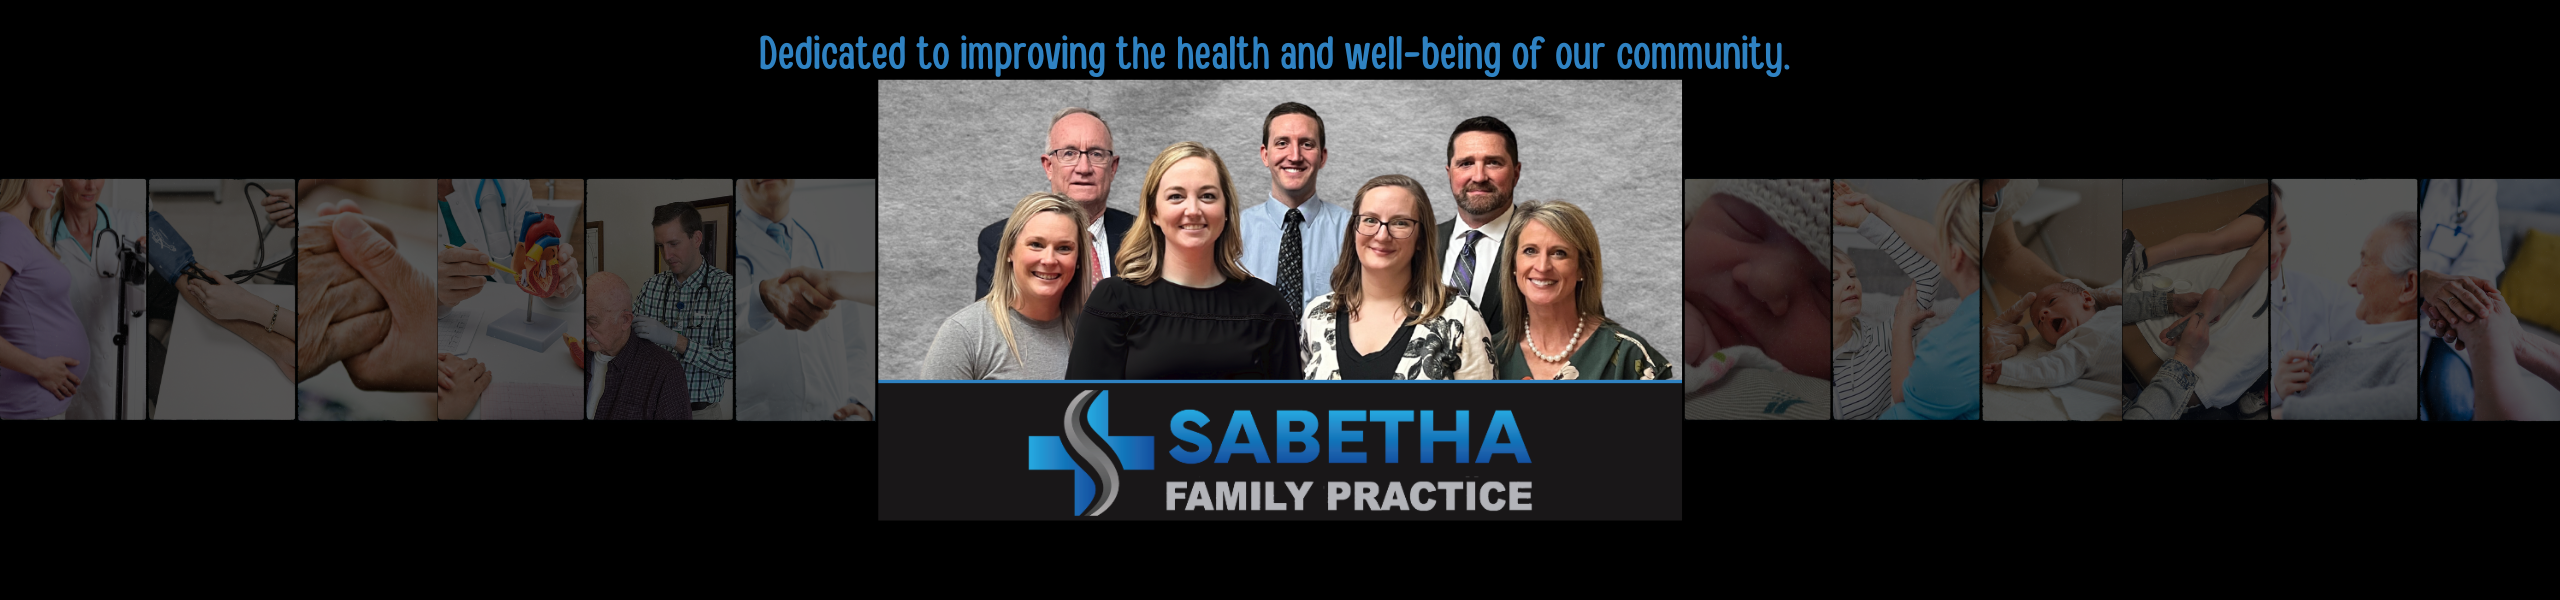 family practice, doctor, sabetha